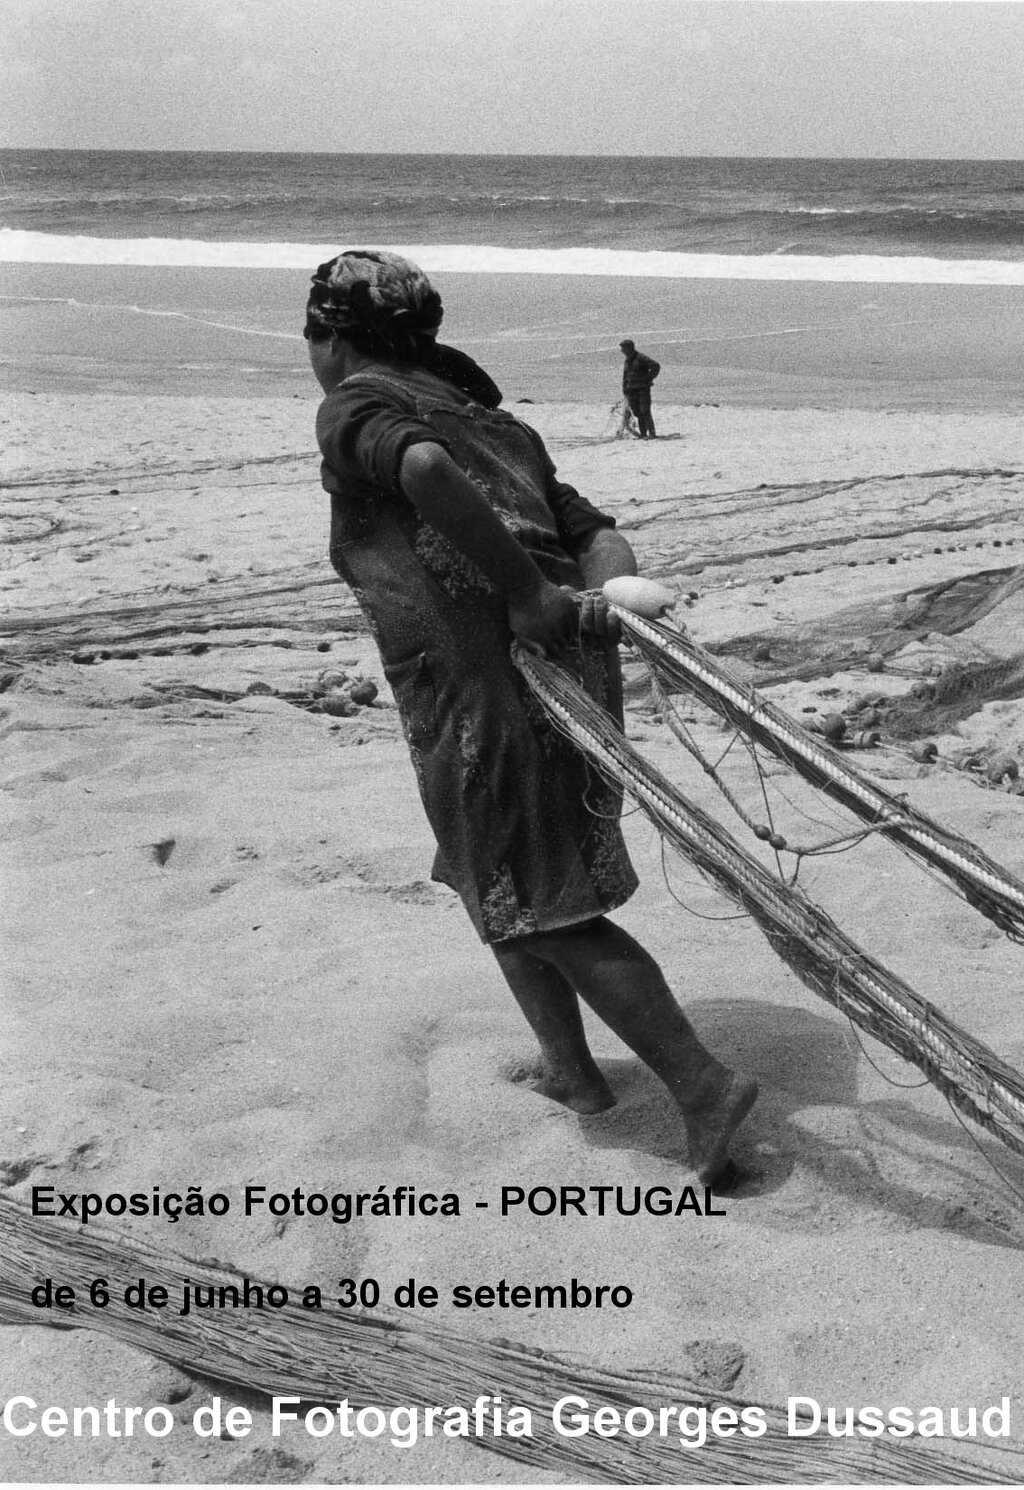 GEORGES DUSSAUD PORTUGAL FOTOGRAFIA